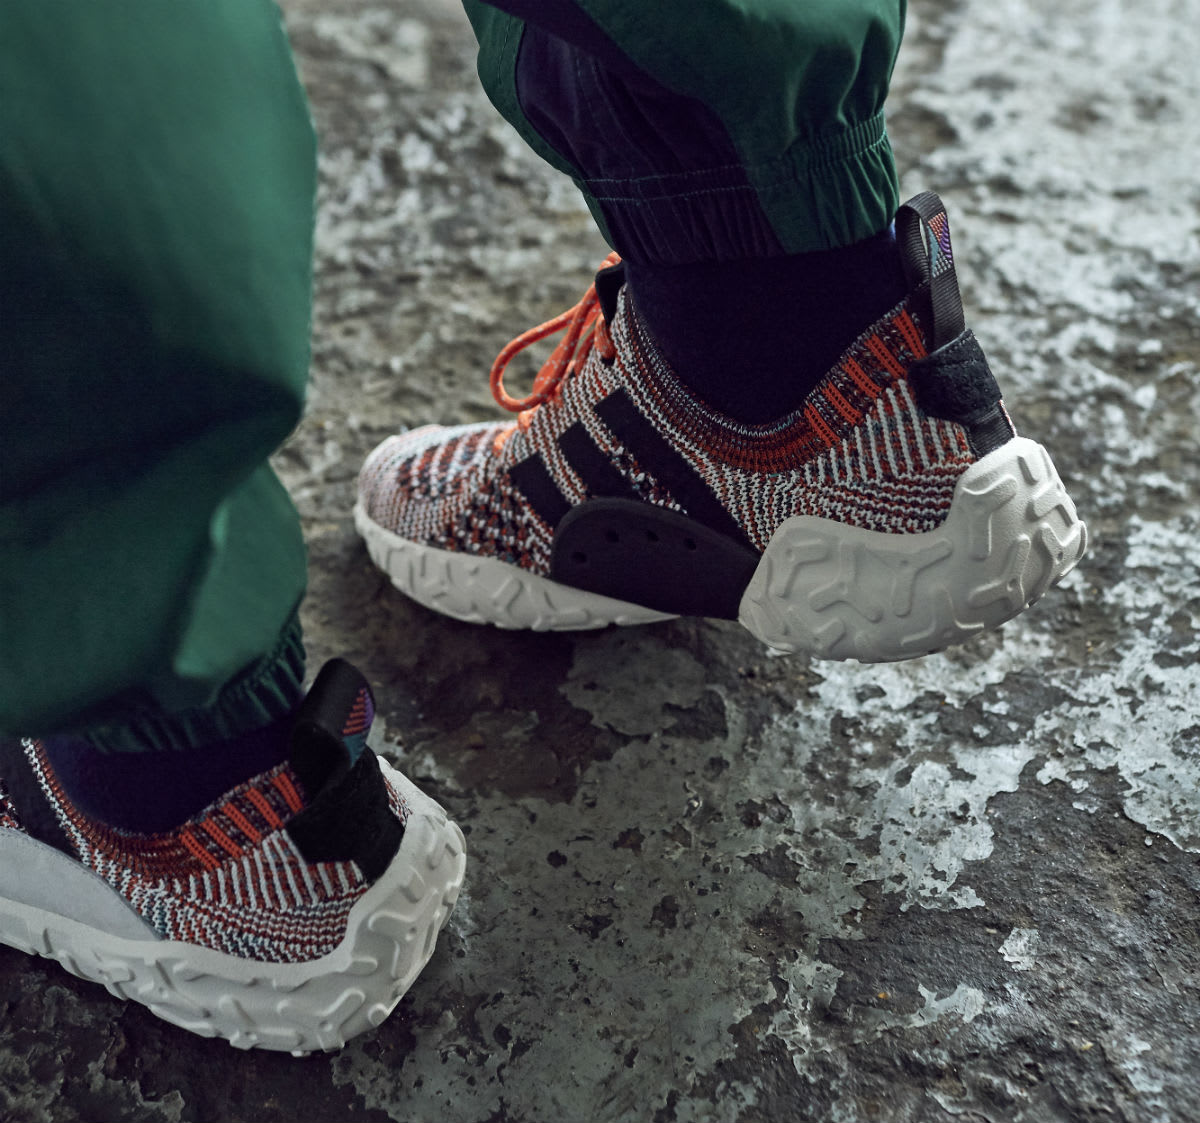 Created Bespoke Merino Wool Primeknit Its Newest Sneaker | Complex